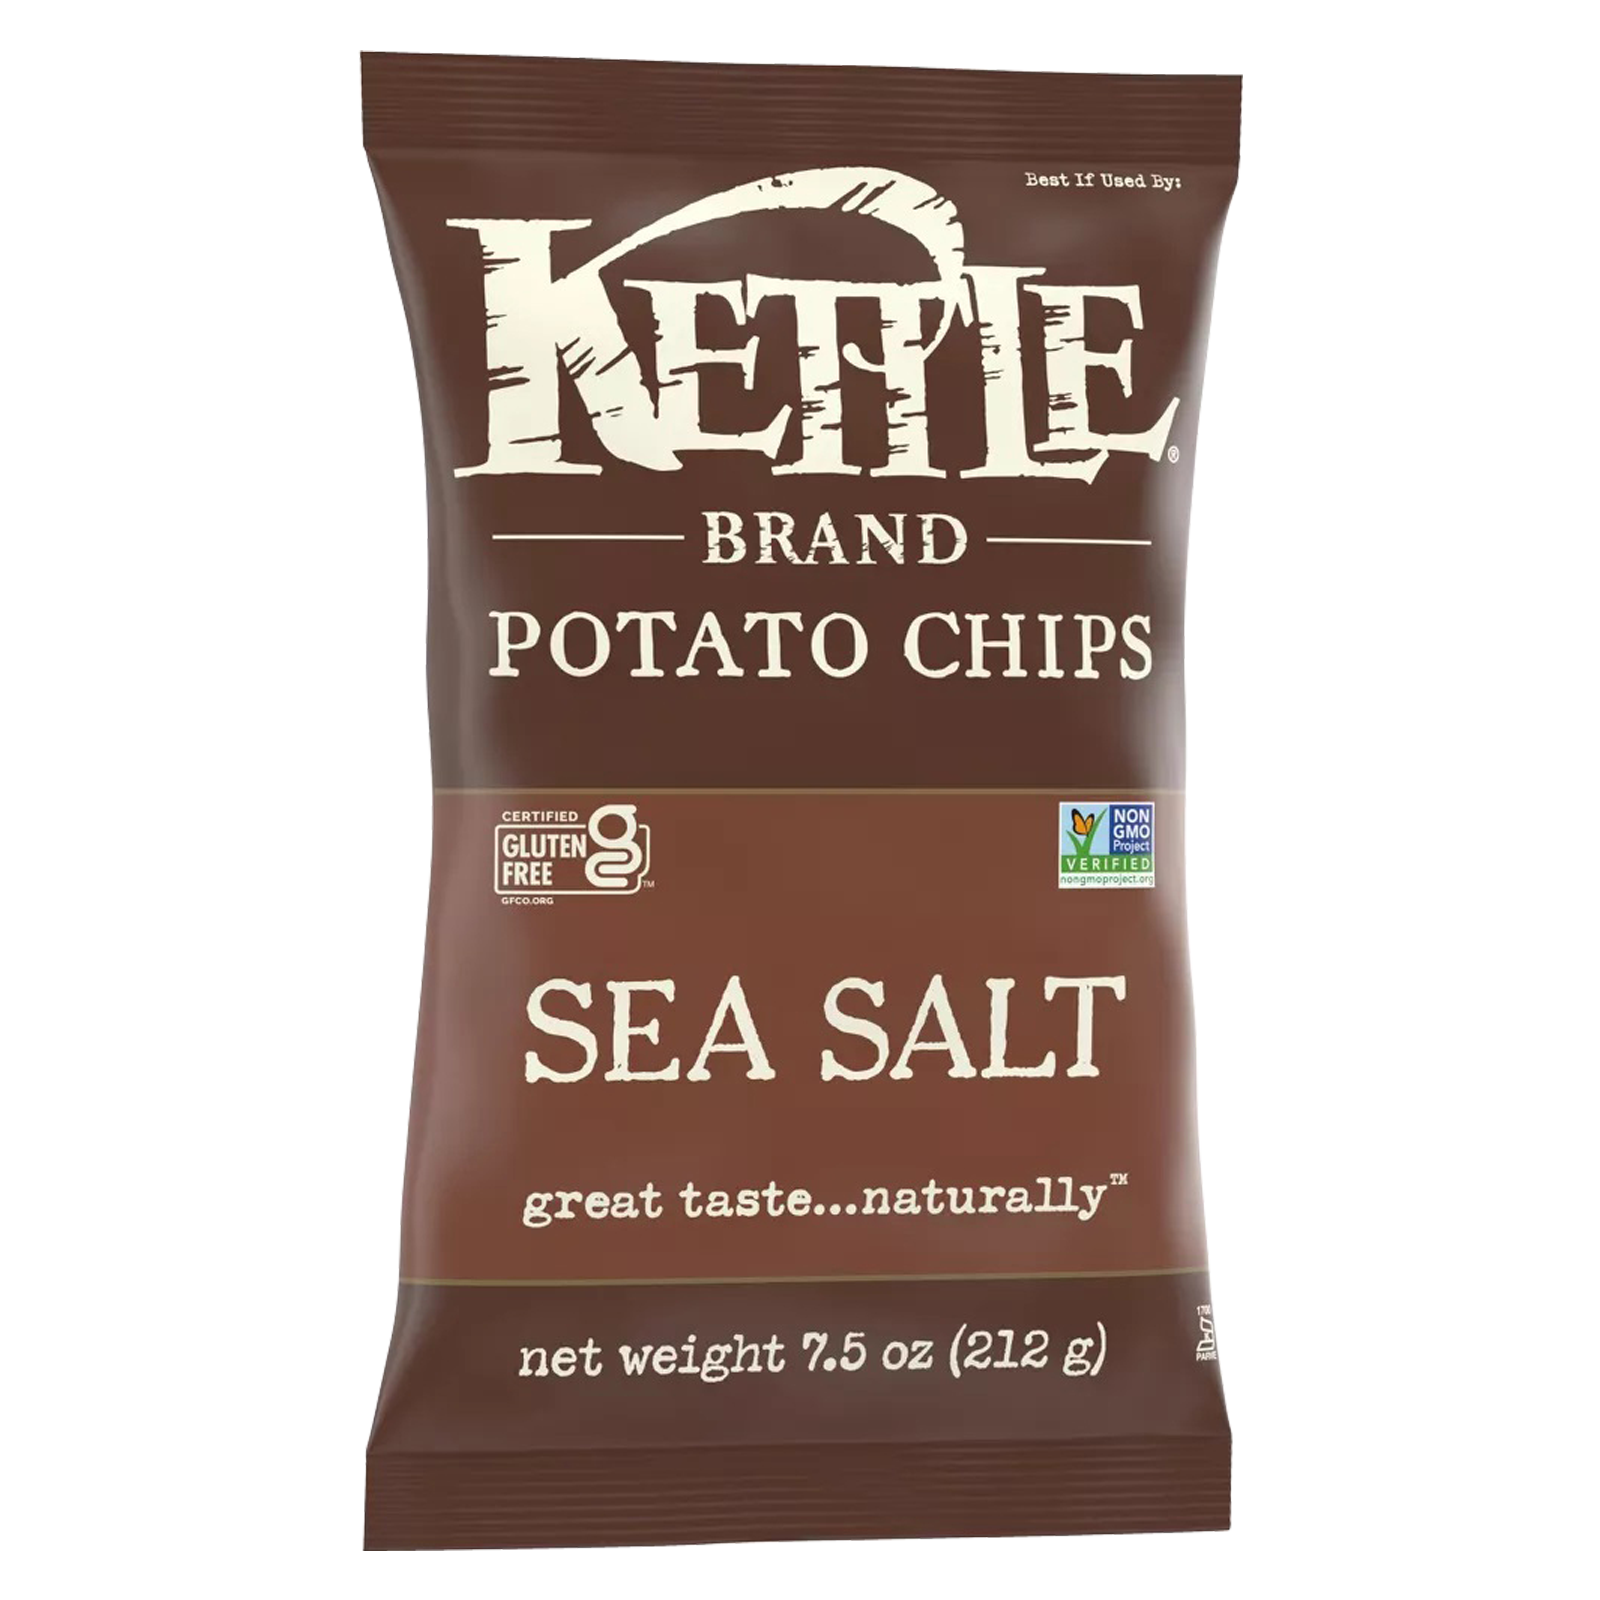 Kettle Brand Sea Salt Potato Chips 7.5oz